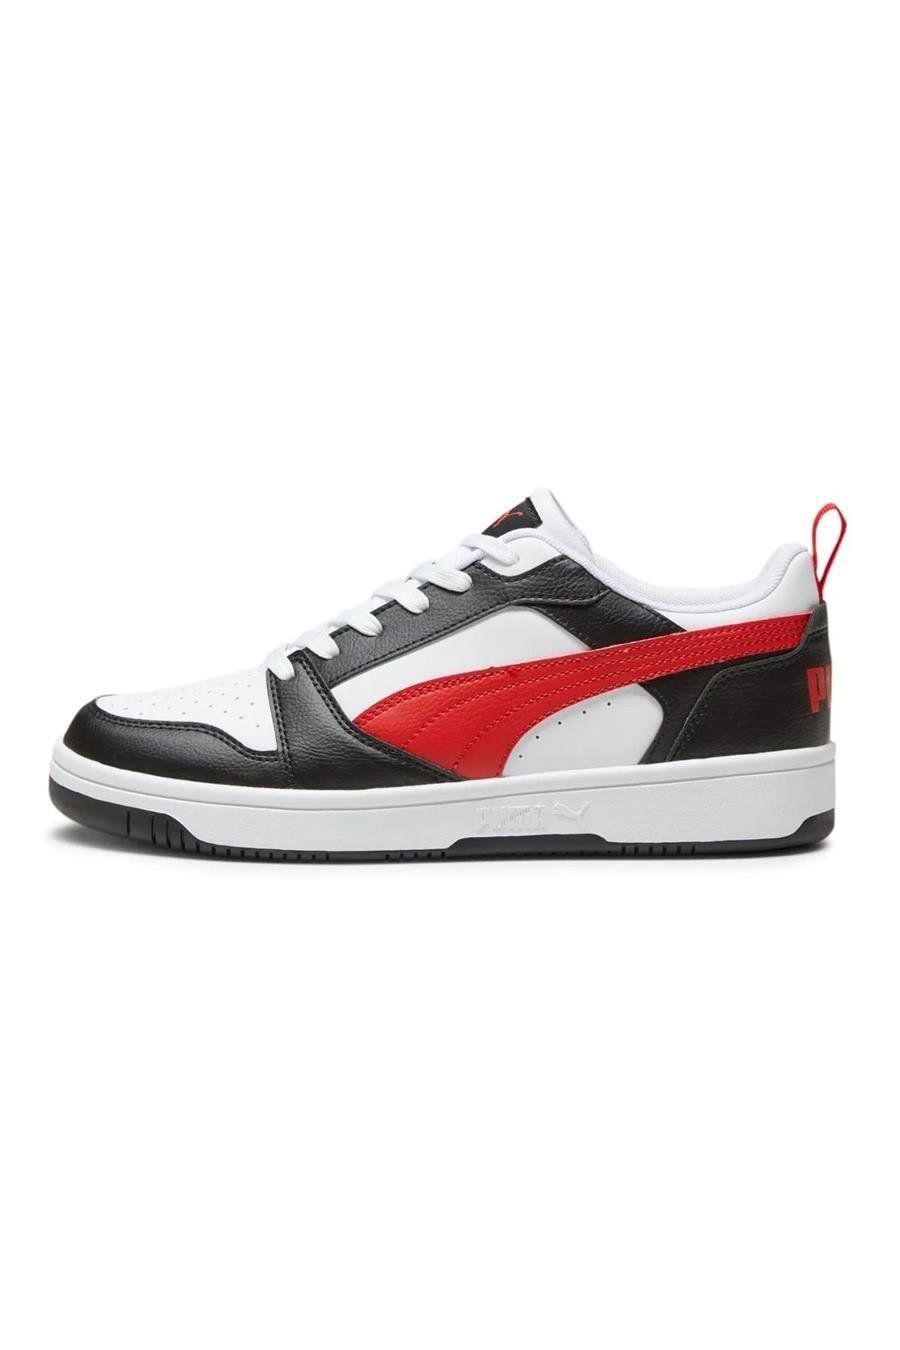 Puma 392328 04 Rebound V6 Low Puma White-For All Time Red-Puma Black  Yetişkin Erkek Sneaker Ayakkabısı